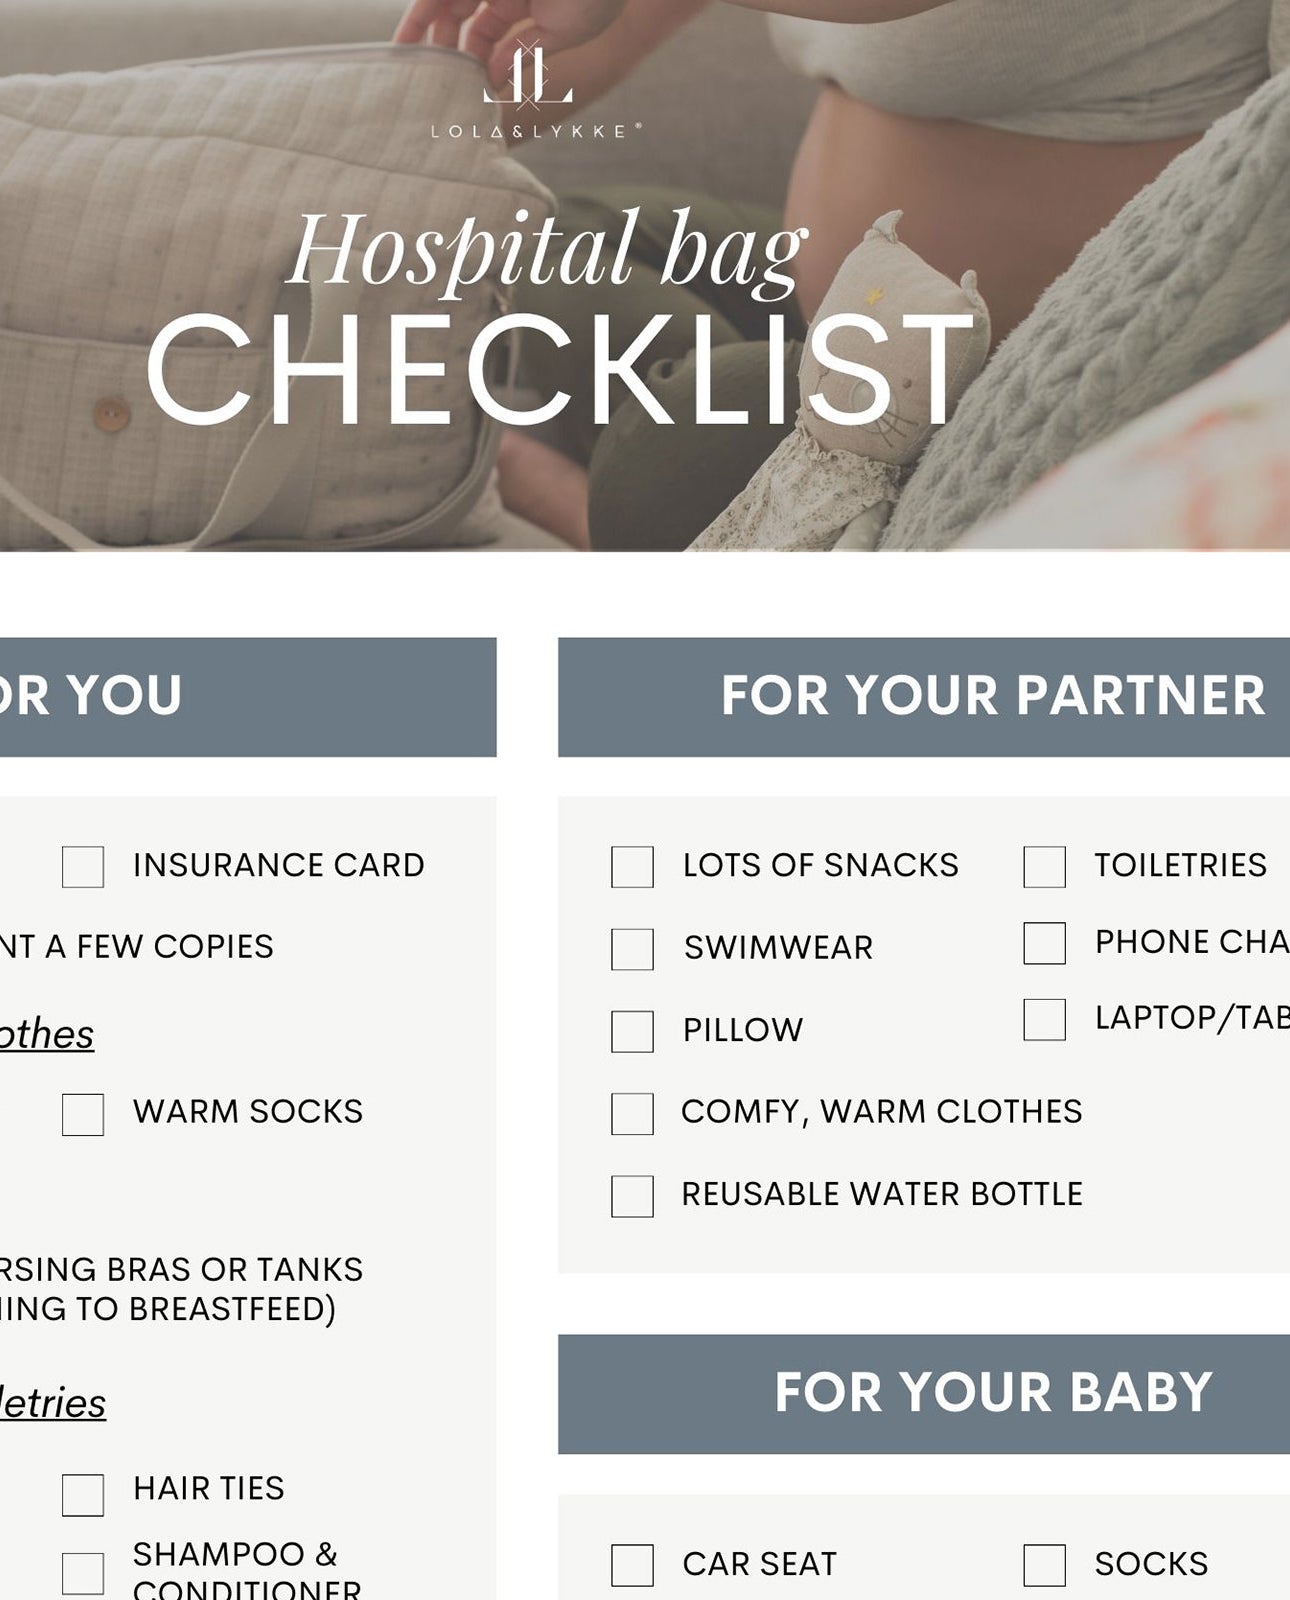 Hospital Checklist